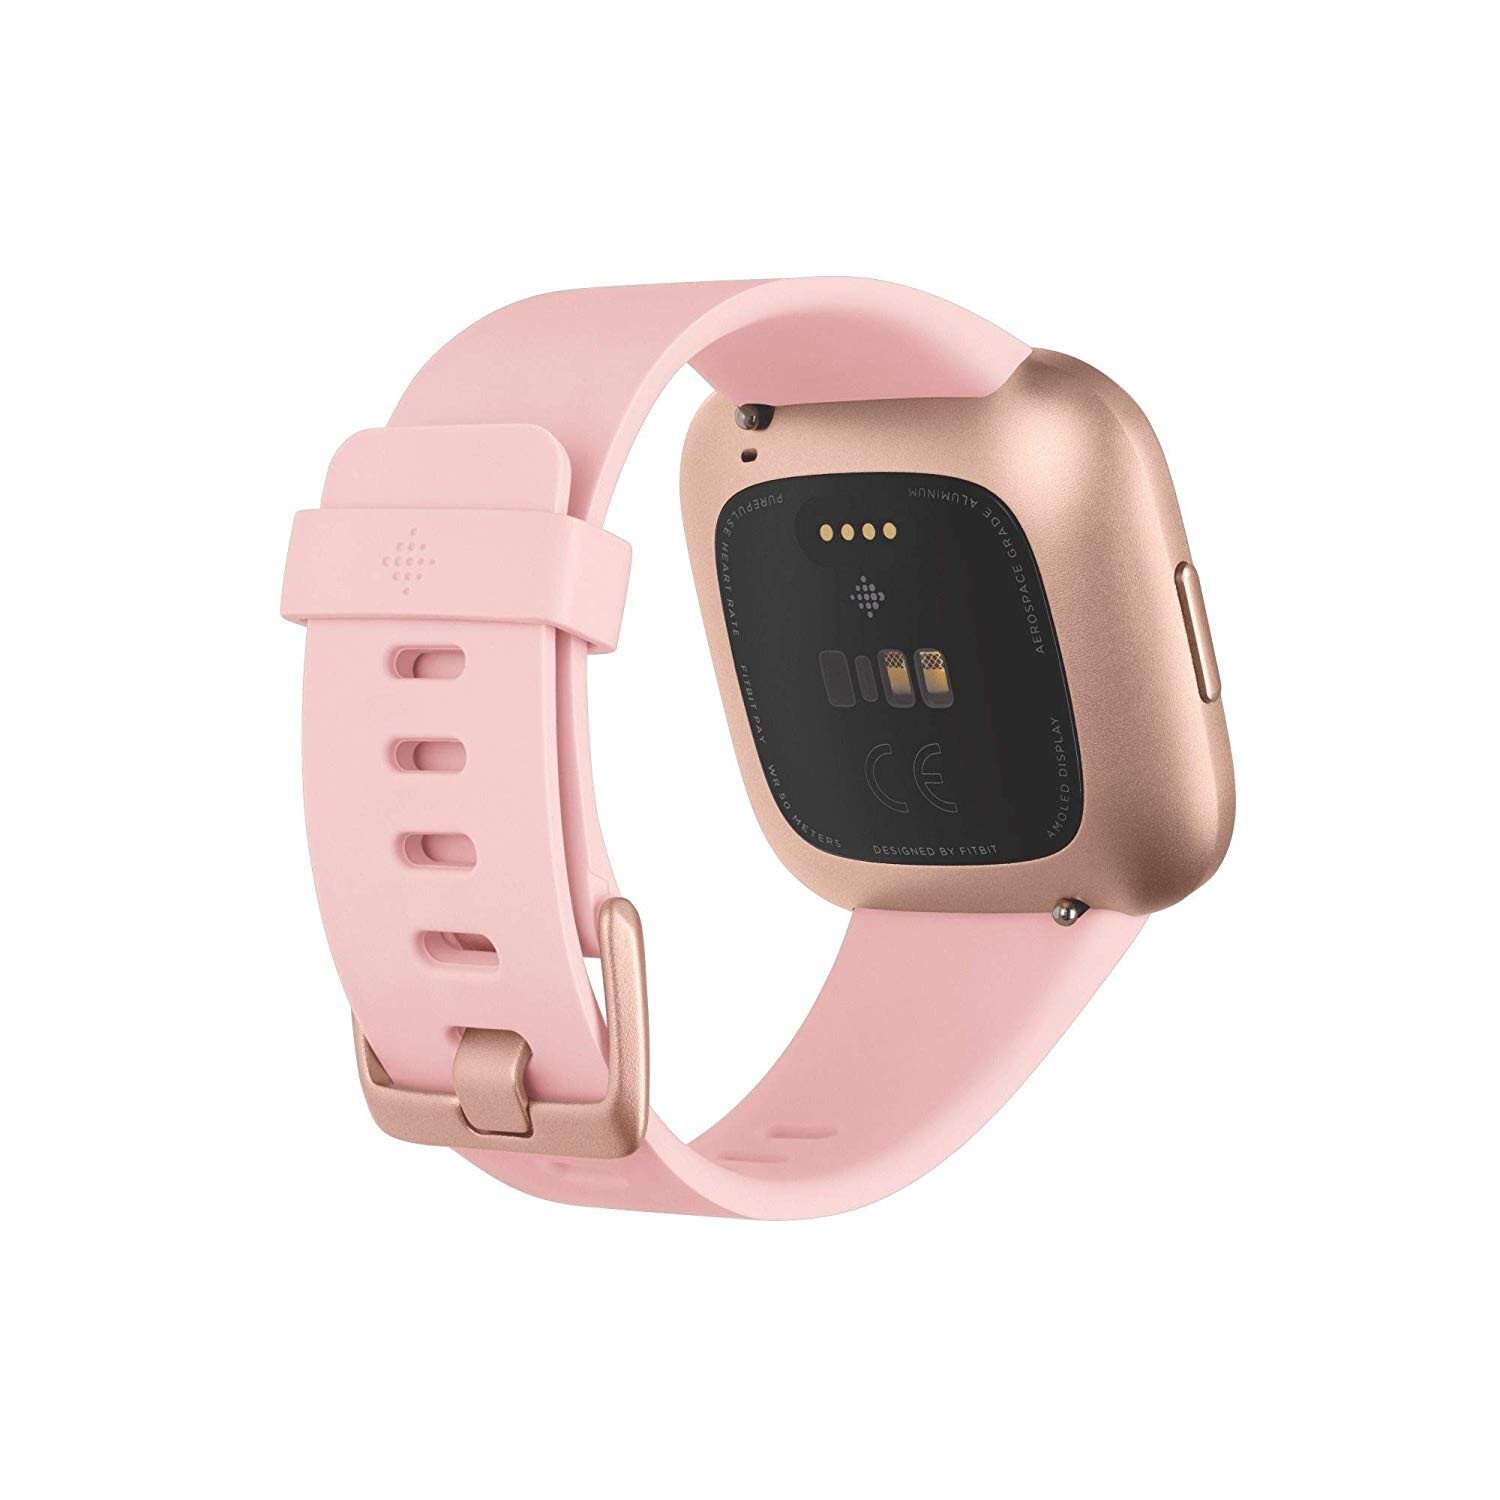 Fitbit Versa 2 Health & Fitness Smartwatch - Petal /Copper Rose Aluminum 